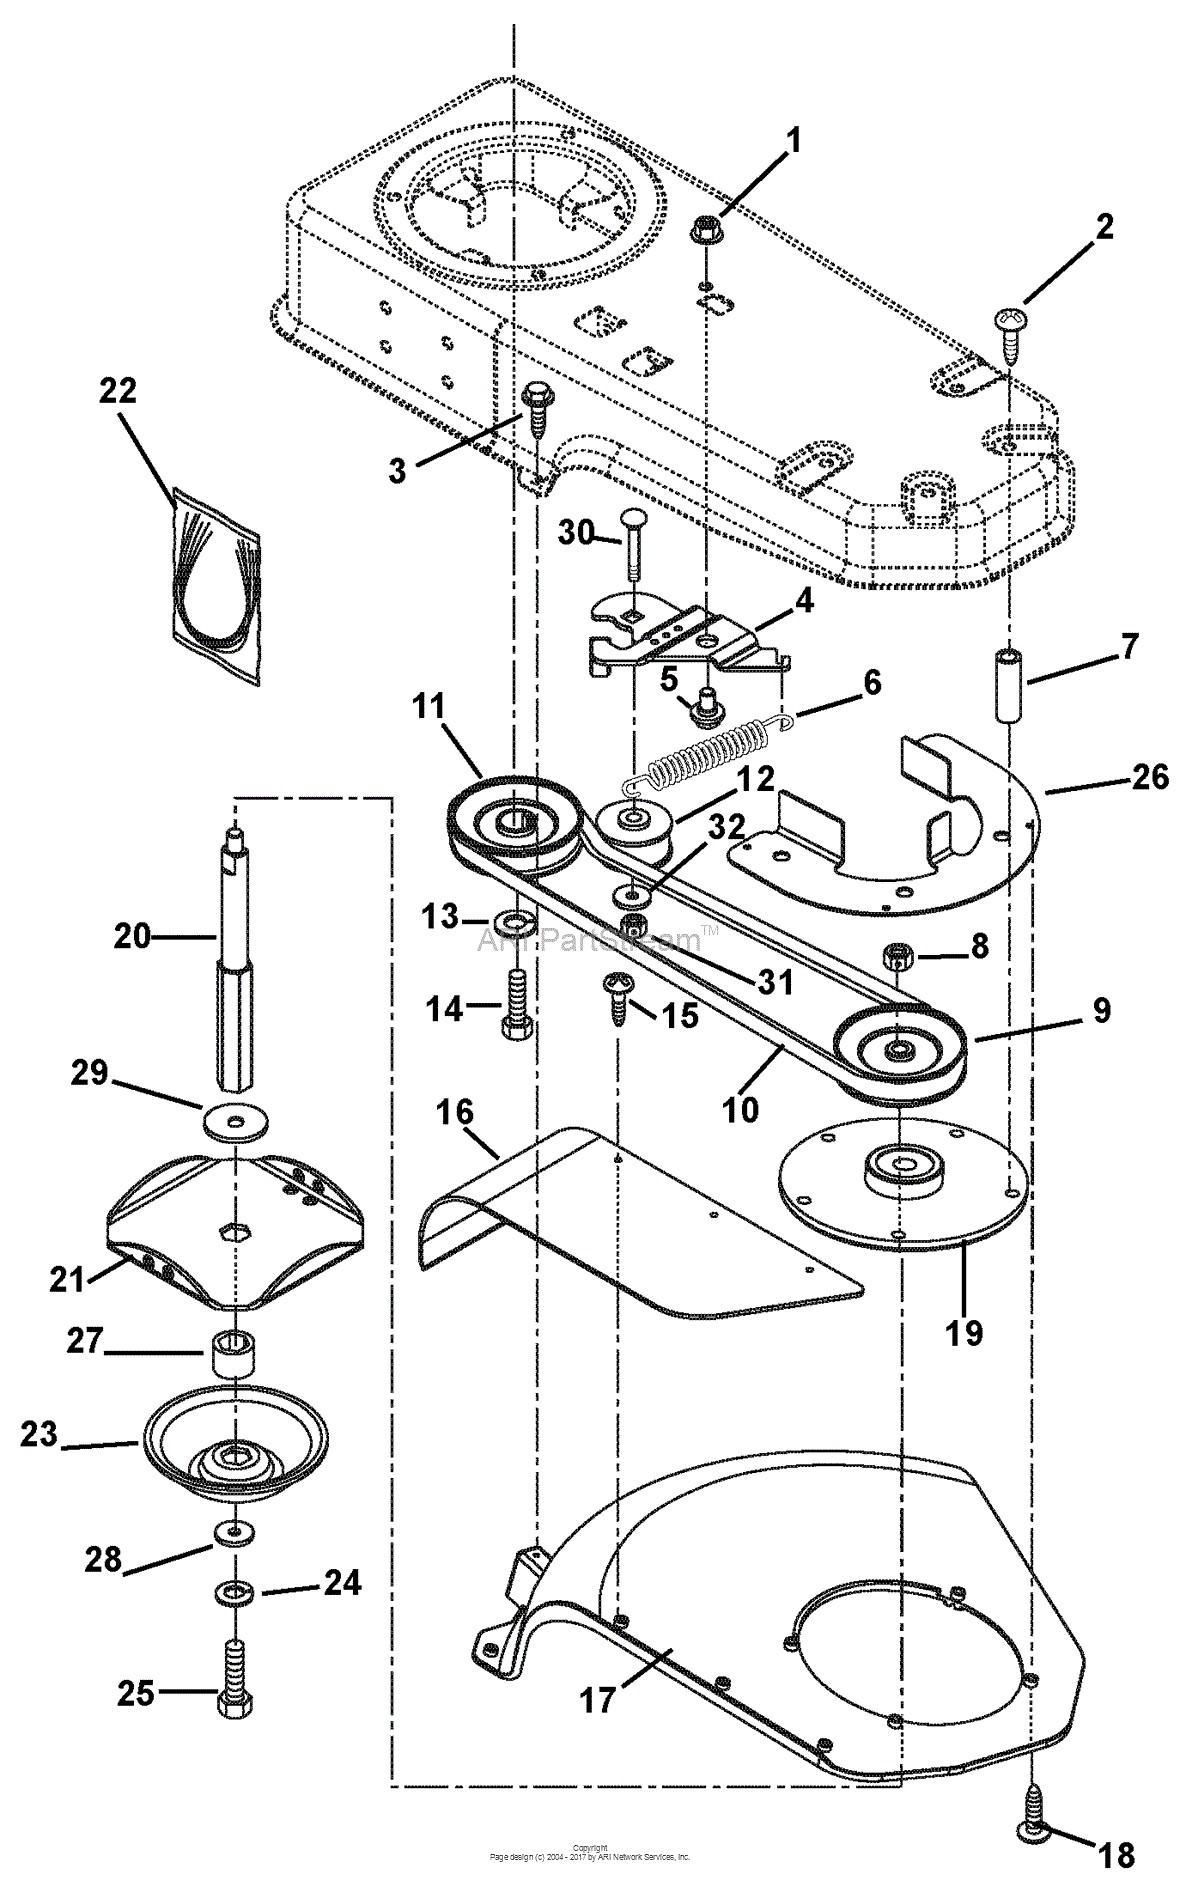 Ariens Mower Parts Diagram Ariens St622 4 Cycle Tecumseh Centura 6hp Parts Of Ariens Mower Parts Diagram